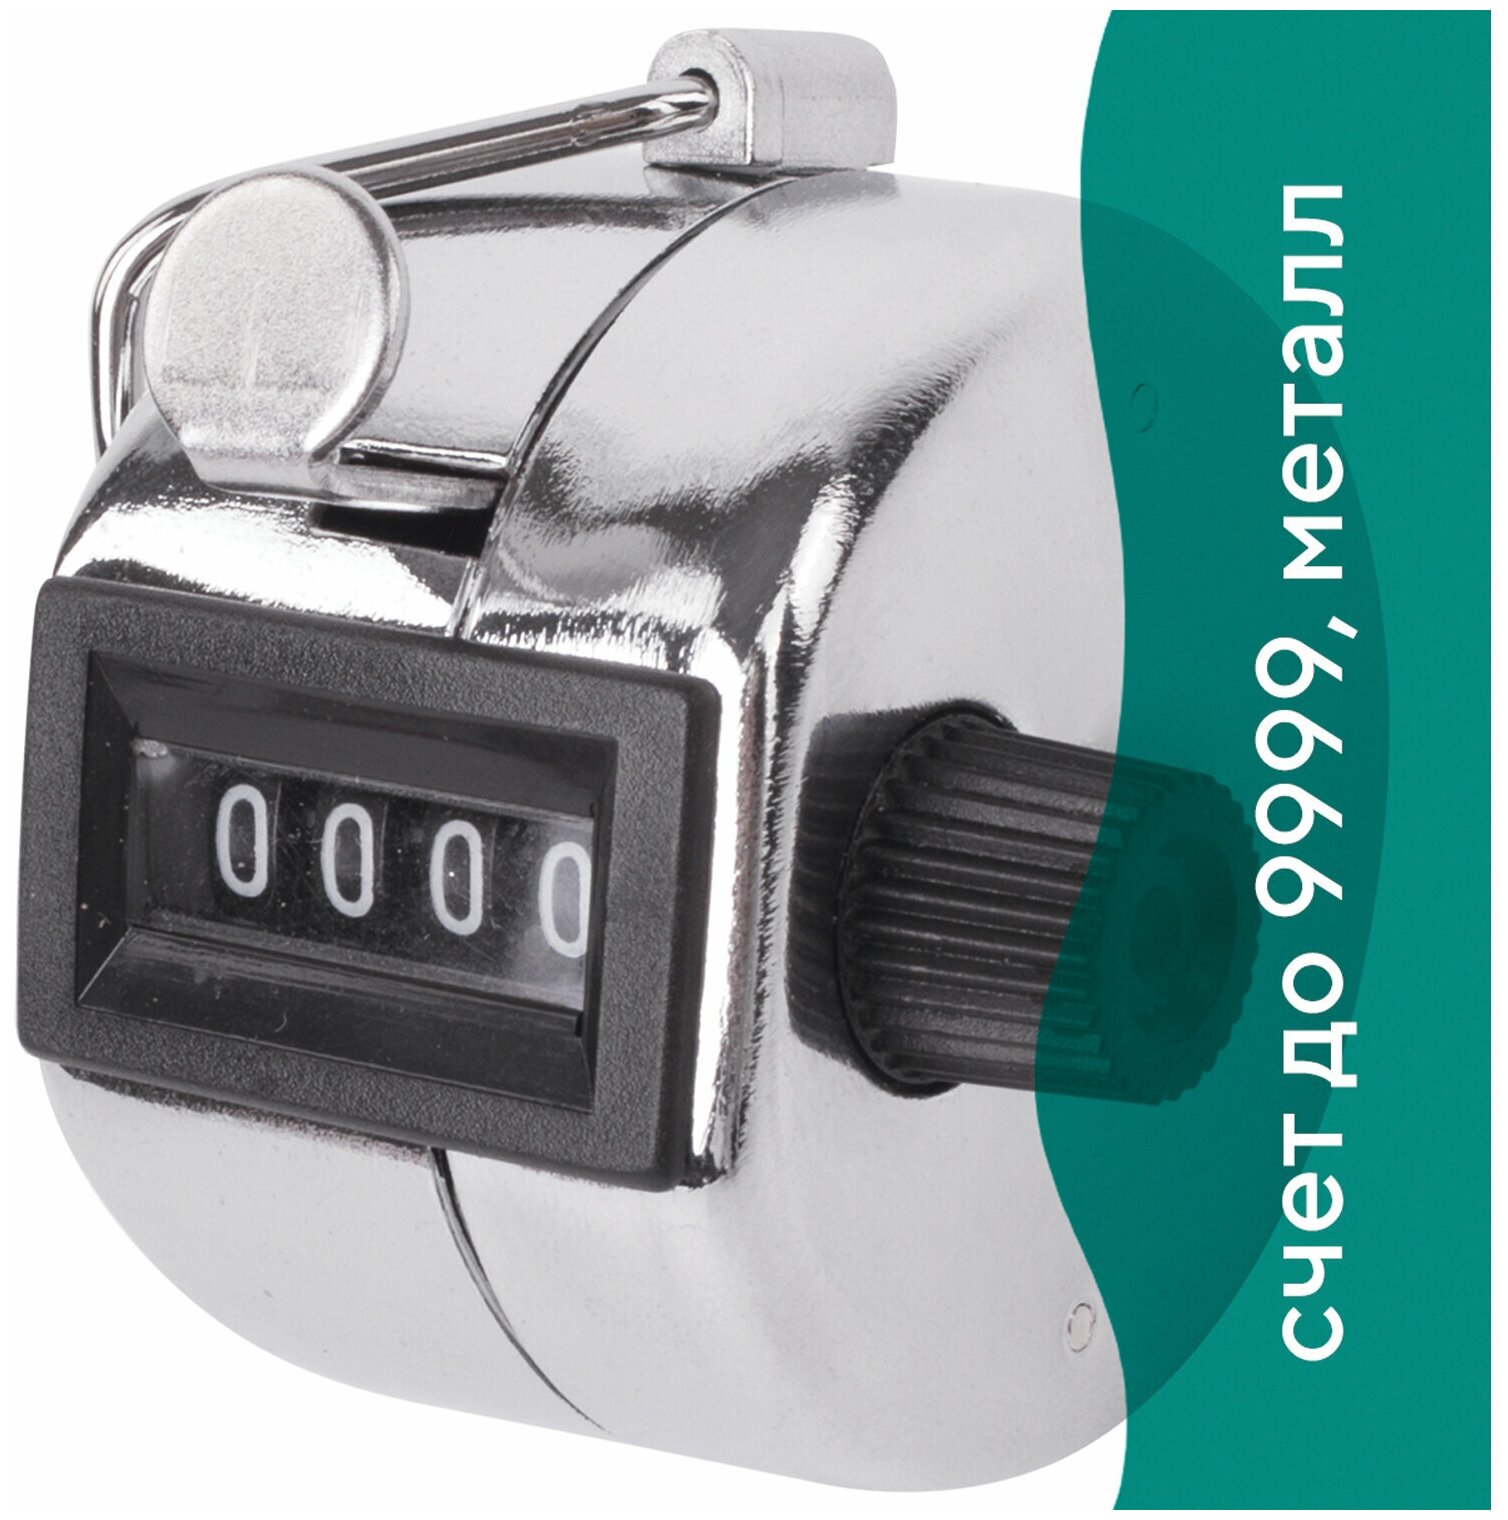 Счетчик механический (кликер), счет от 0 до 9999, корпус металлический, хром, BRAUBERG, 453995 - 1 шт.